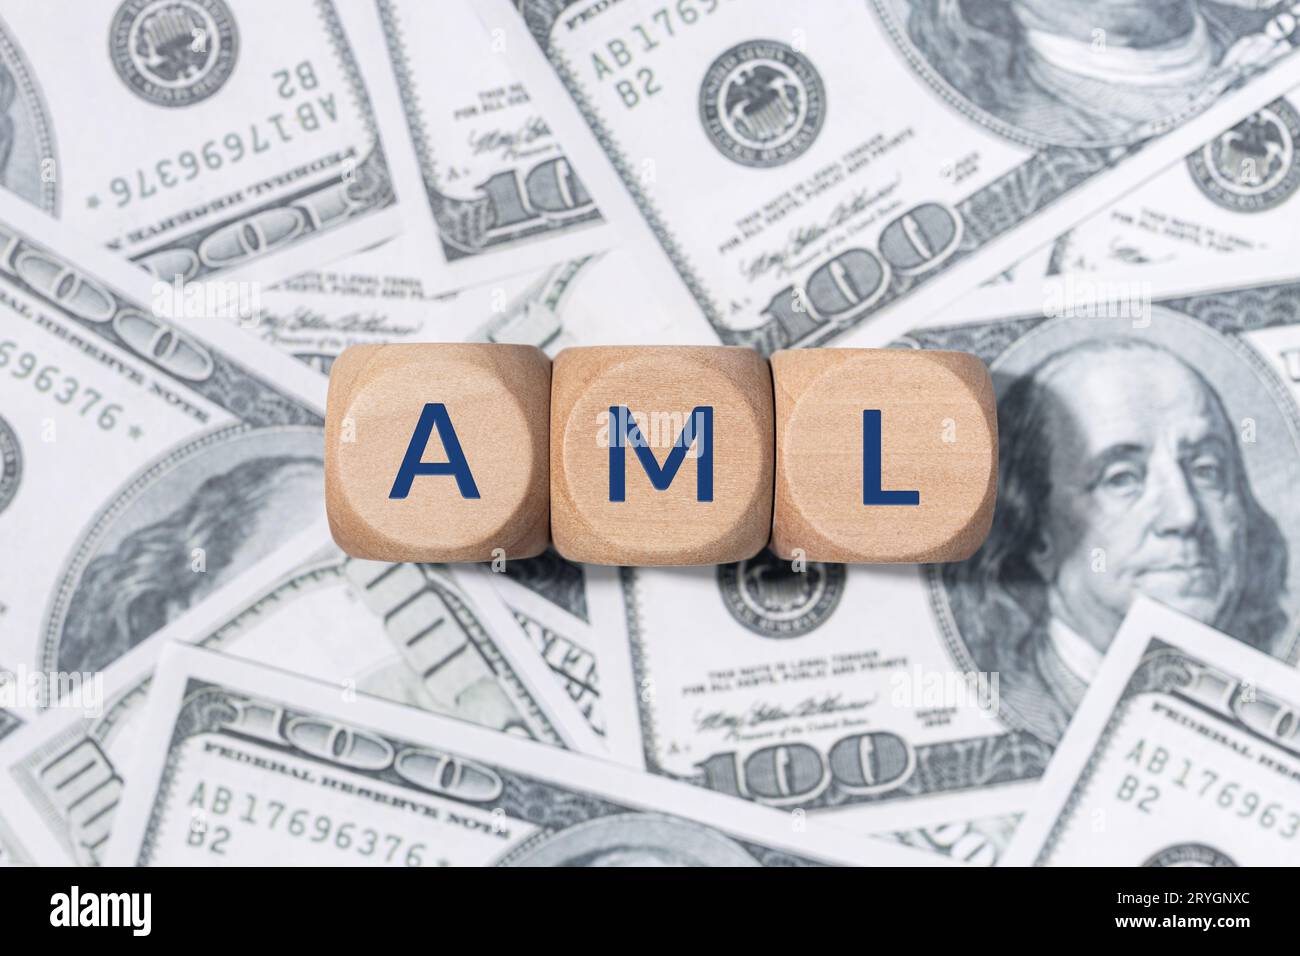 AML word on wooden blocks and US dollar bills background. Anti money laundering concept Stock Photo